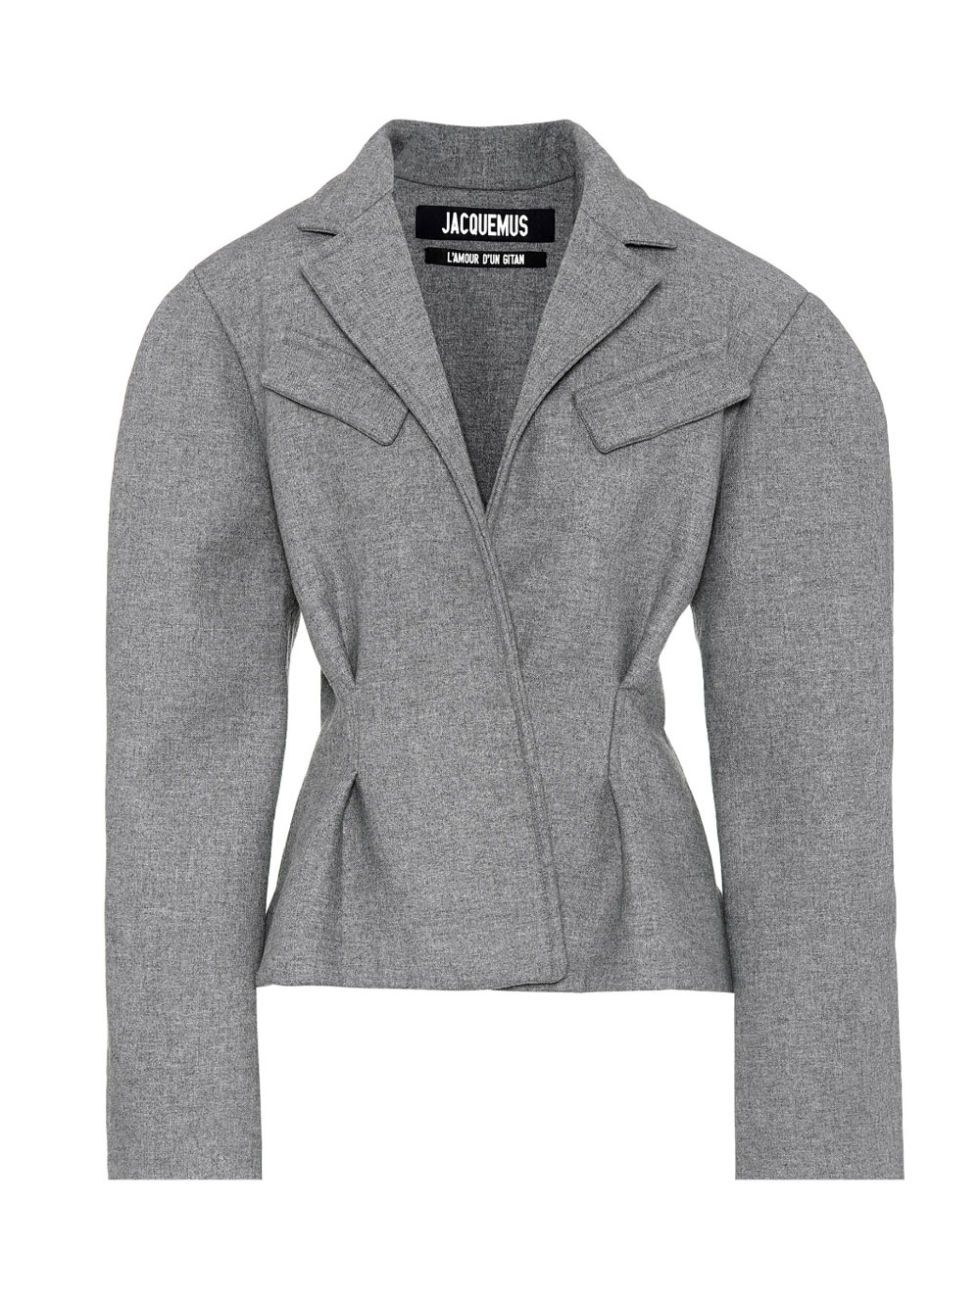 Clothing, Outerwear, Jacket, Blazer, Sleeve, Grey, Top, Sweater, Beige, Collar, 